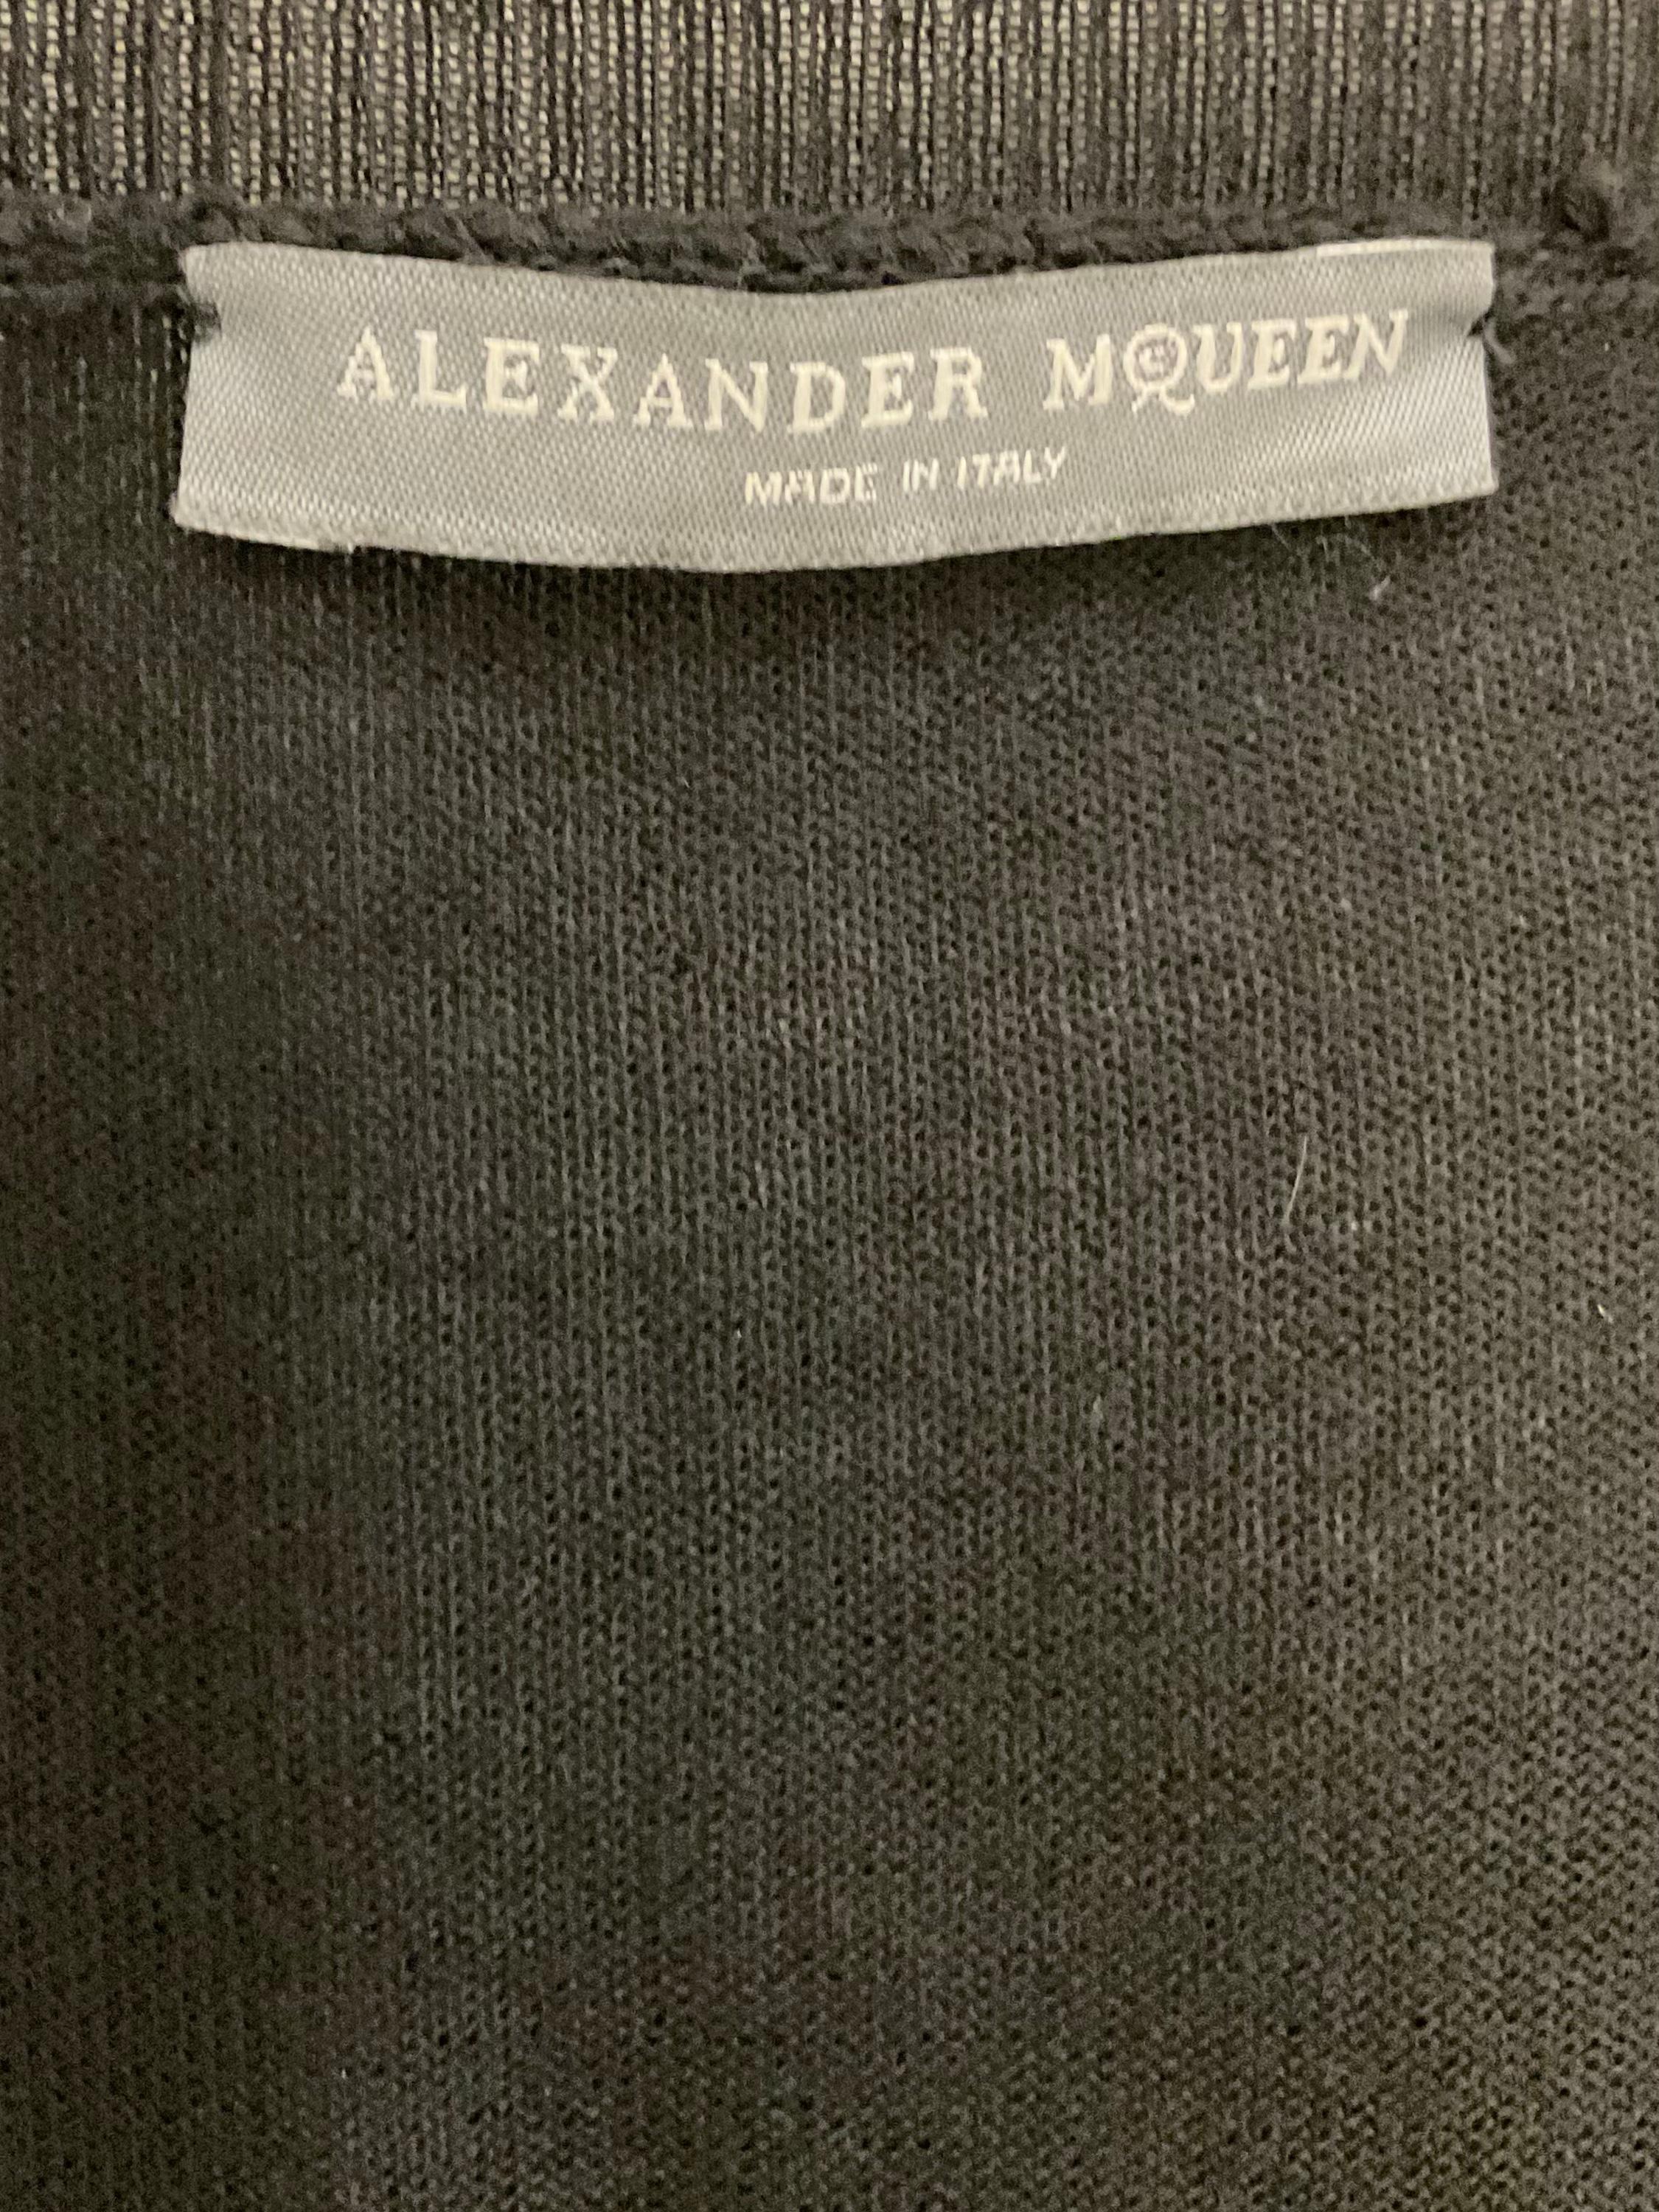 ALEXANDER McQUEEN Black wool knit midi dress For Sale 4